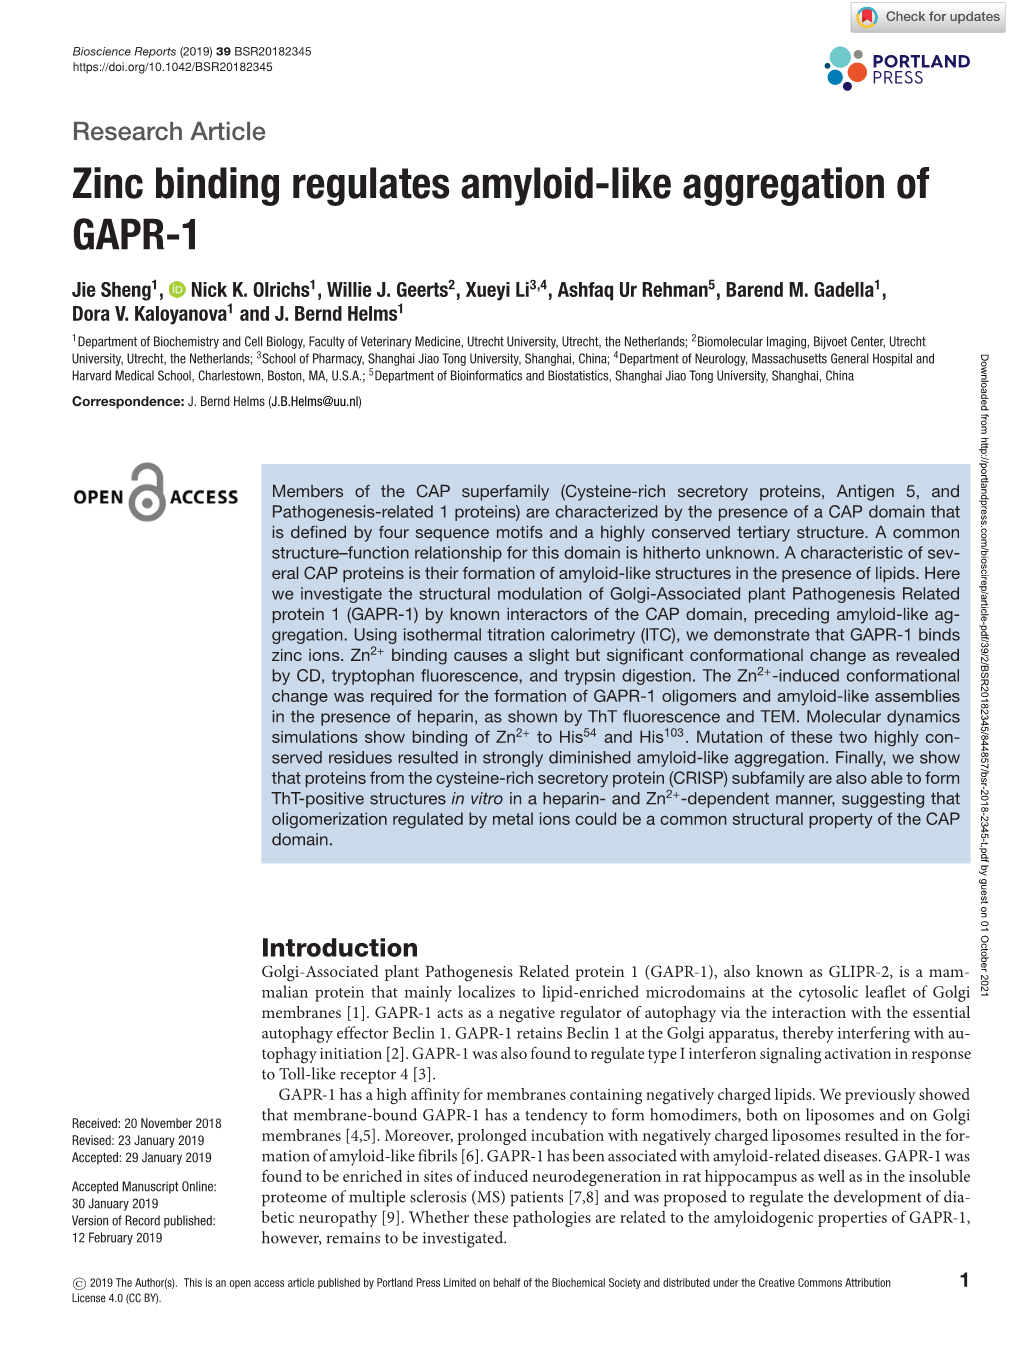 Zinc Binding Regulates Amyloid-Like Aggregation of GAPR-1